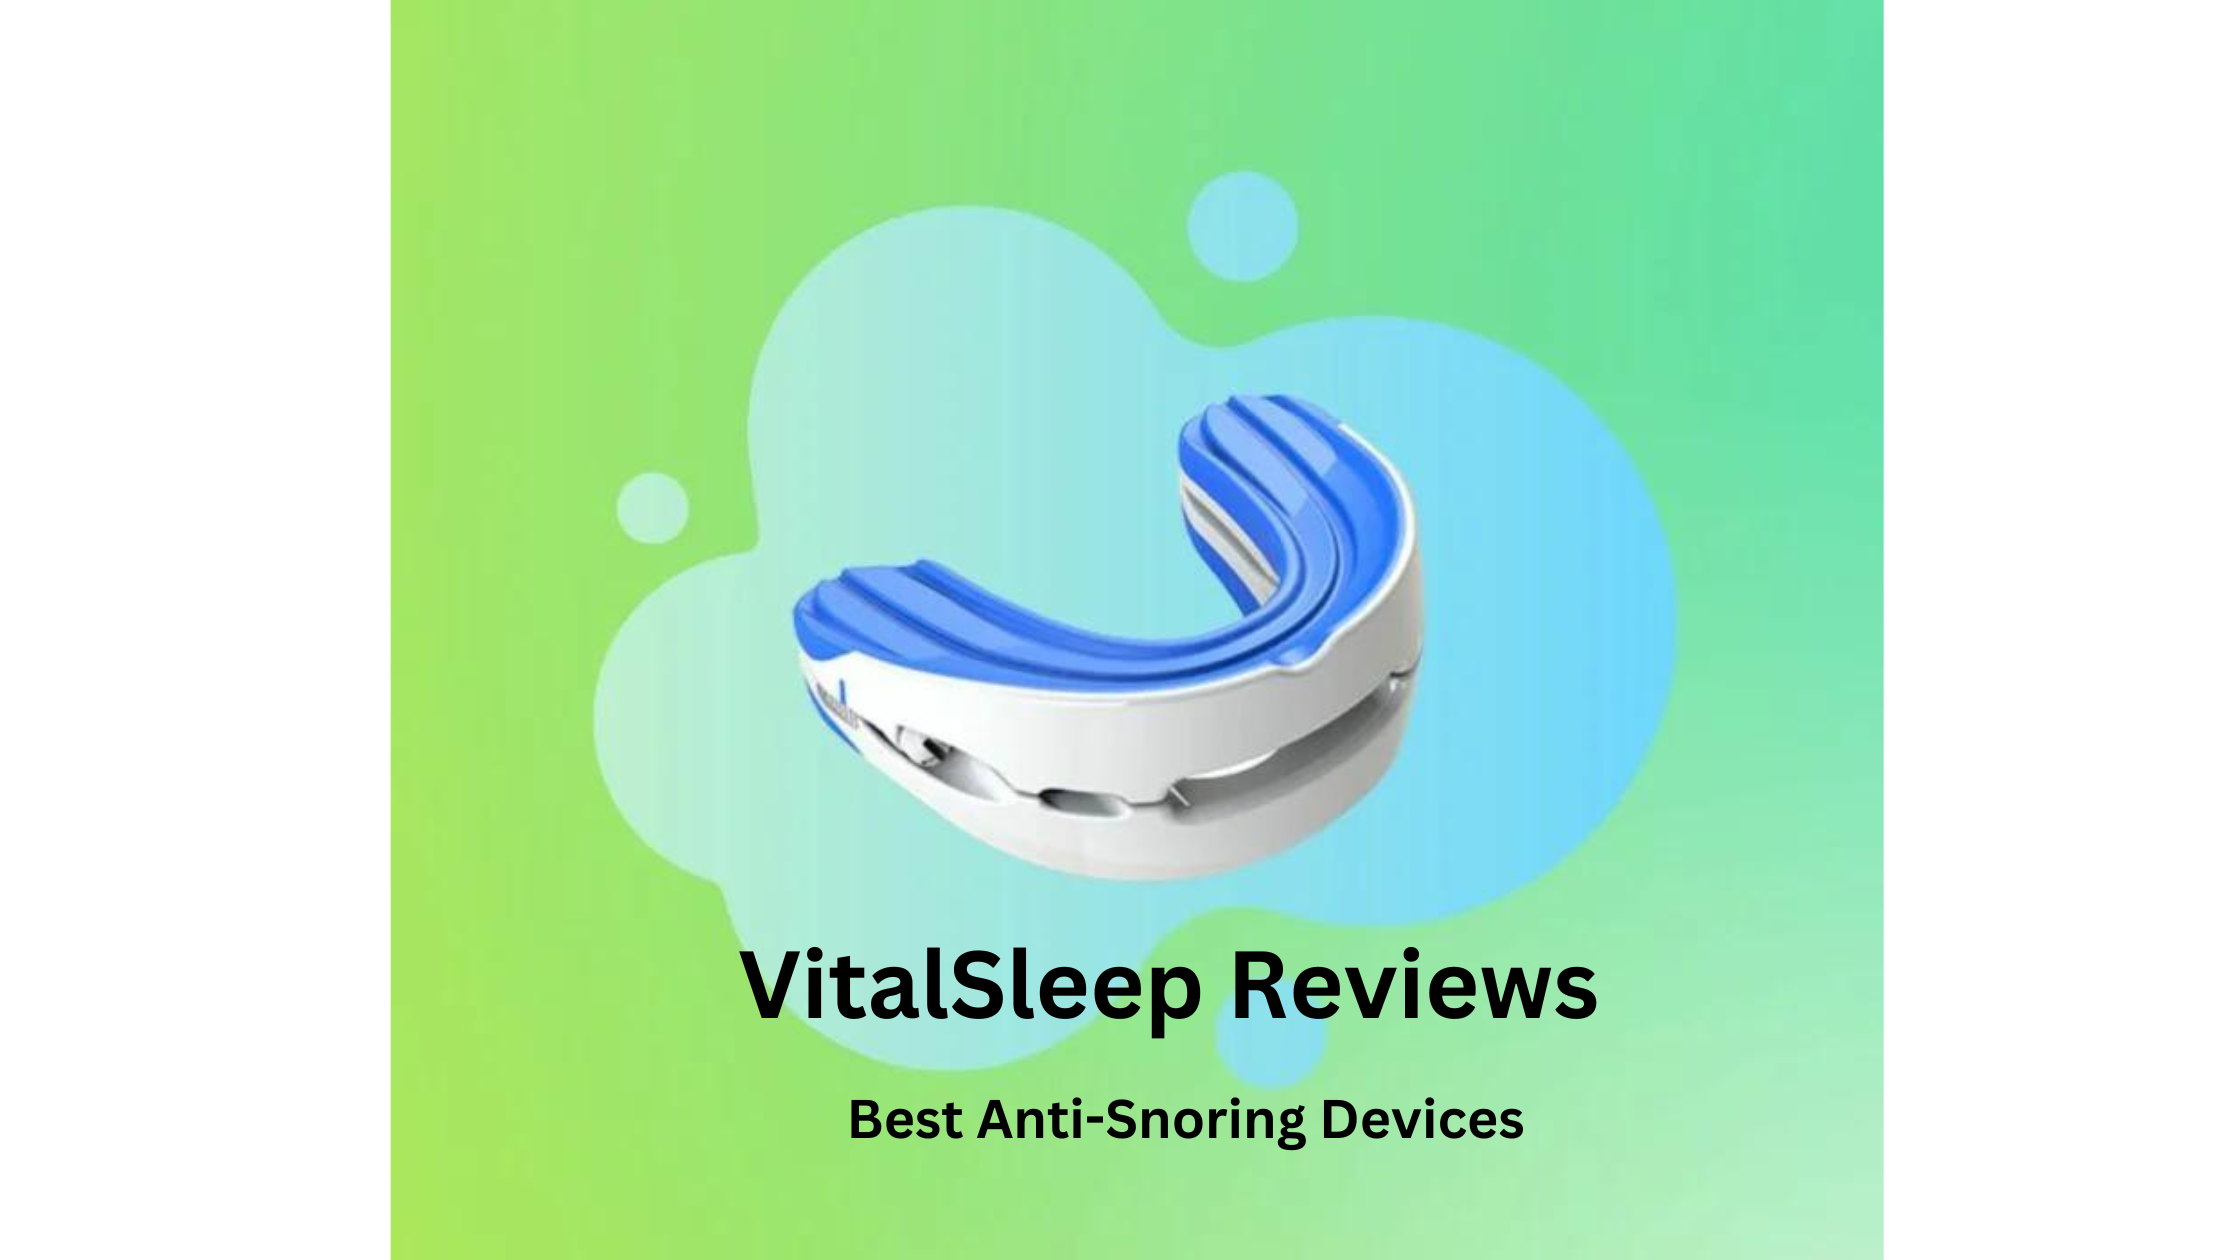 VitalSleep Reviews